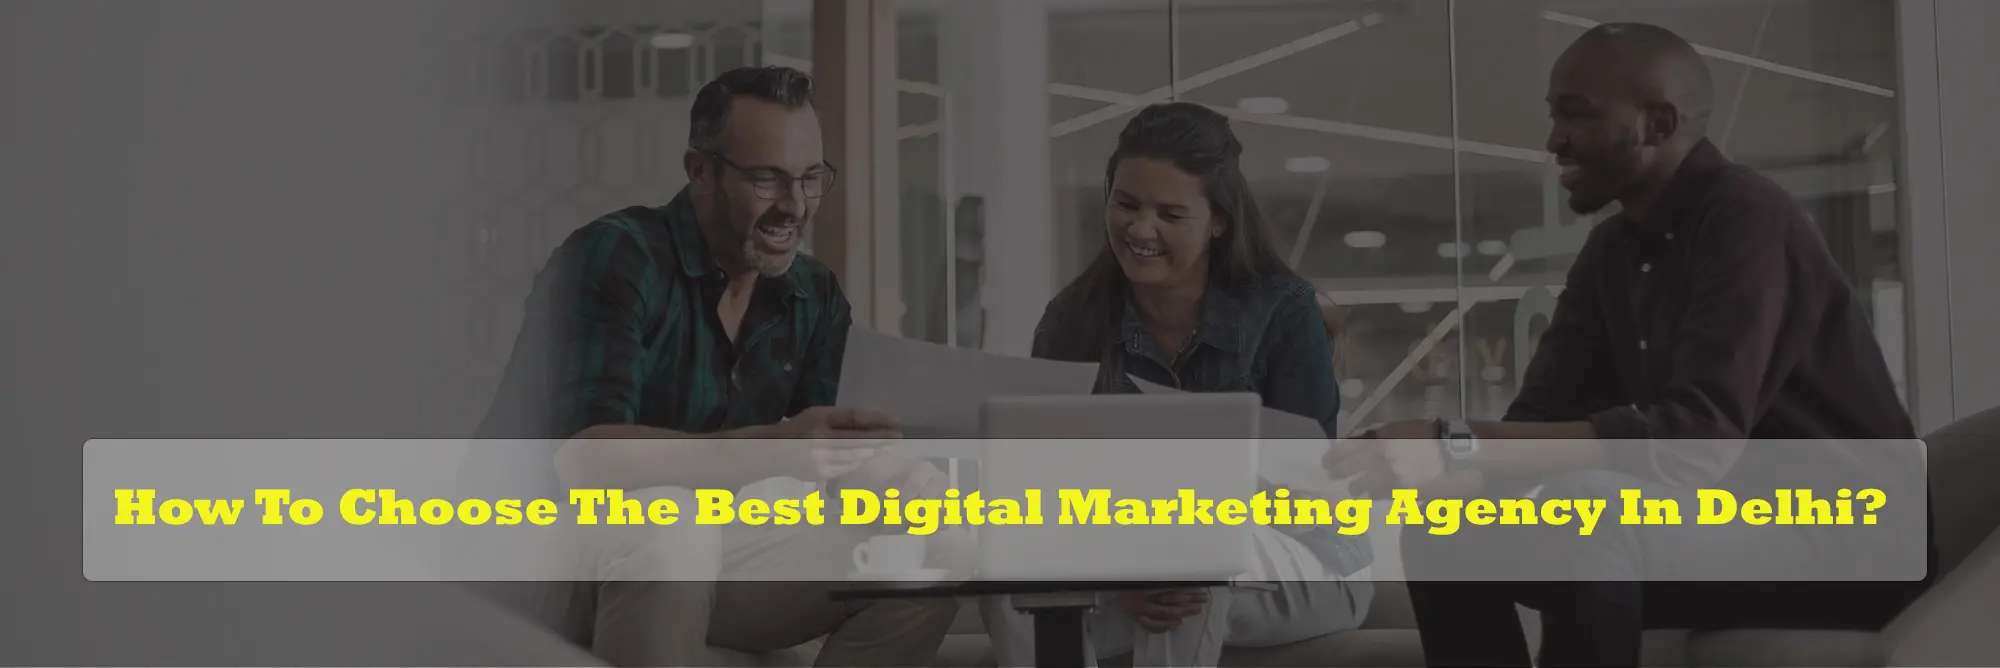 How To Choose The Best Digital Marketing Agency In Delhi? - rank tech digital